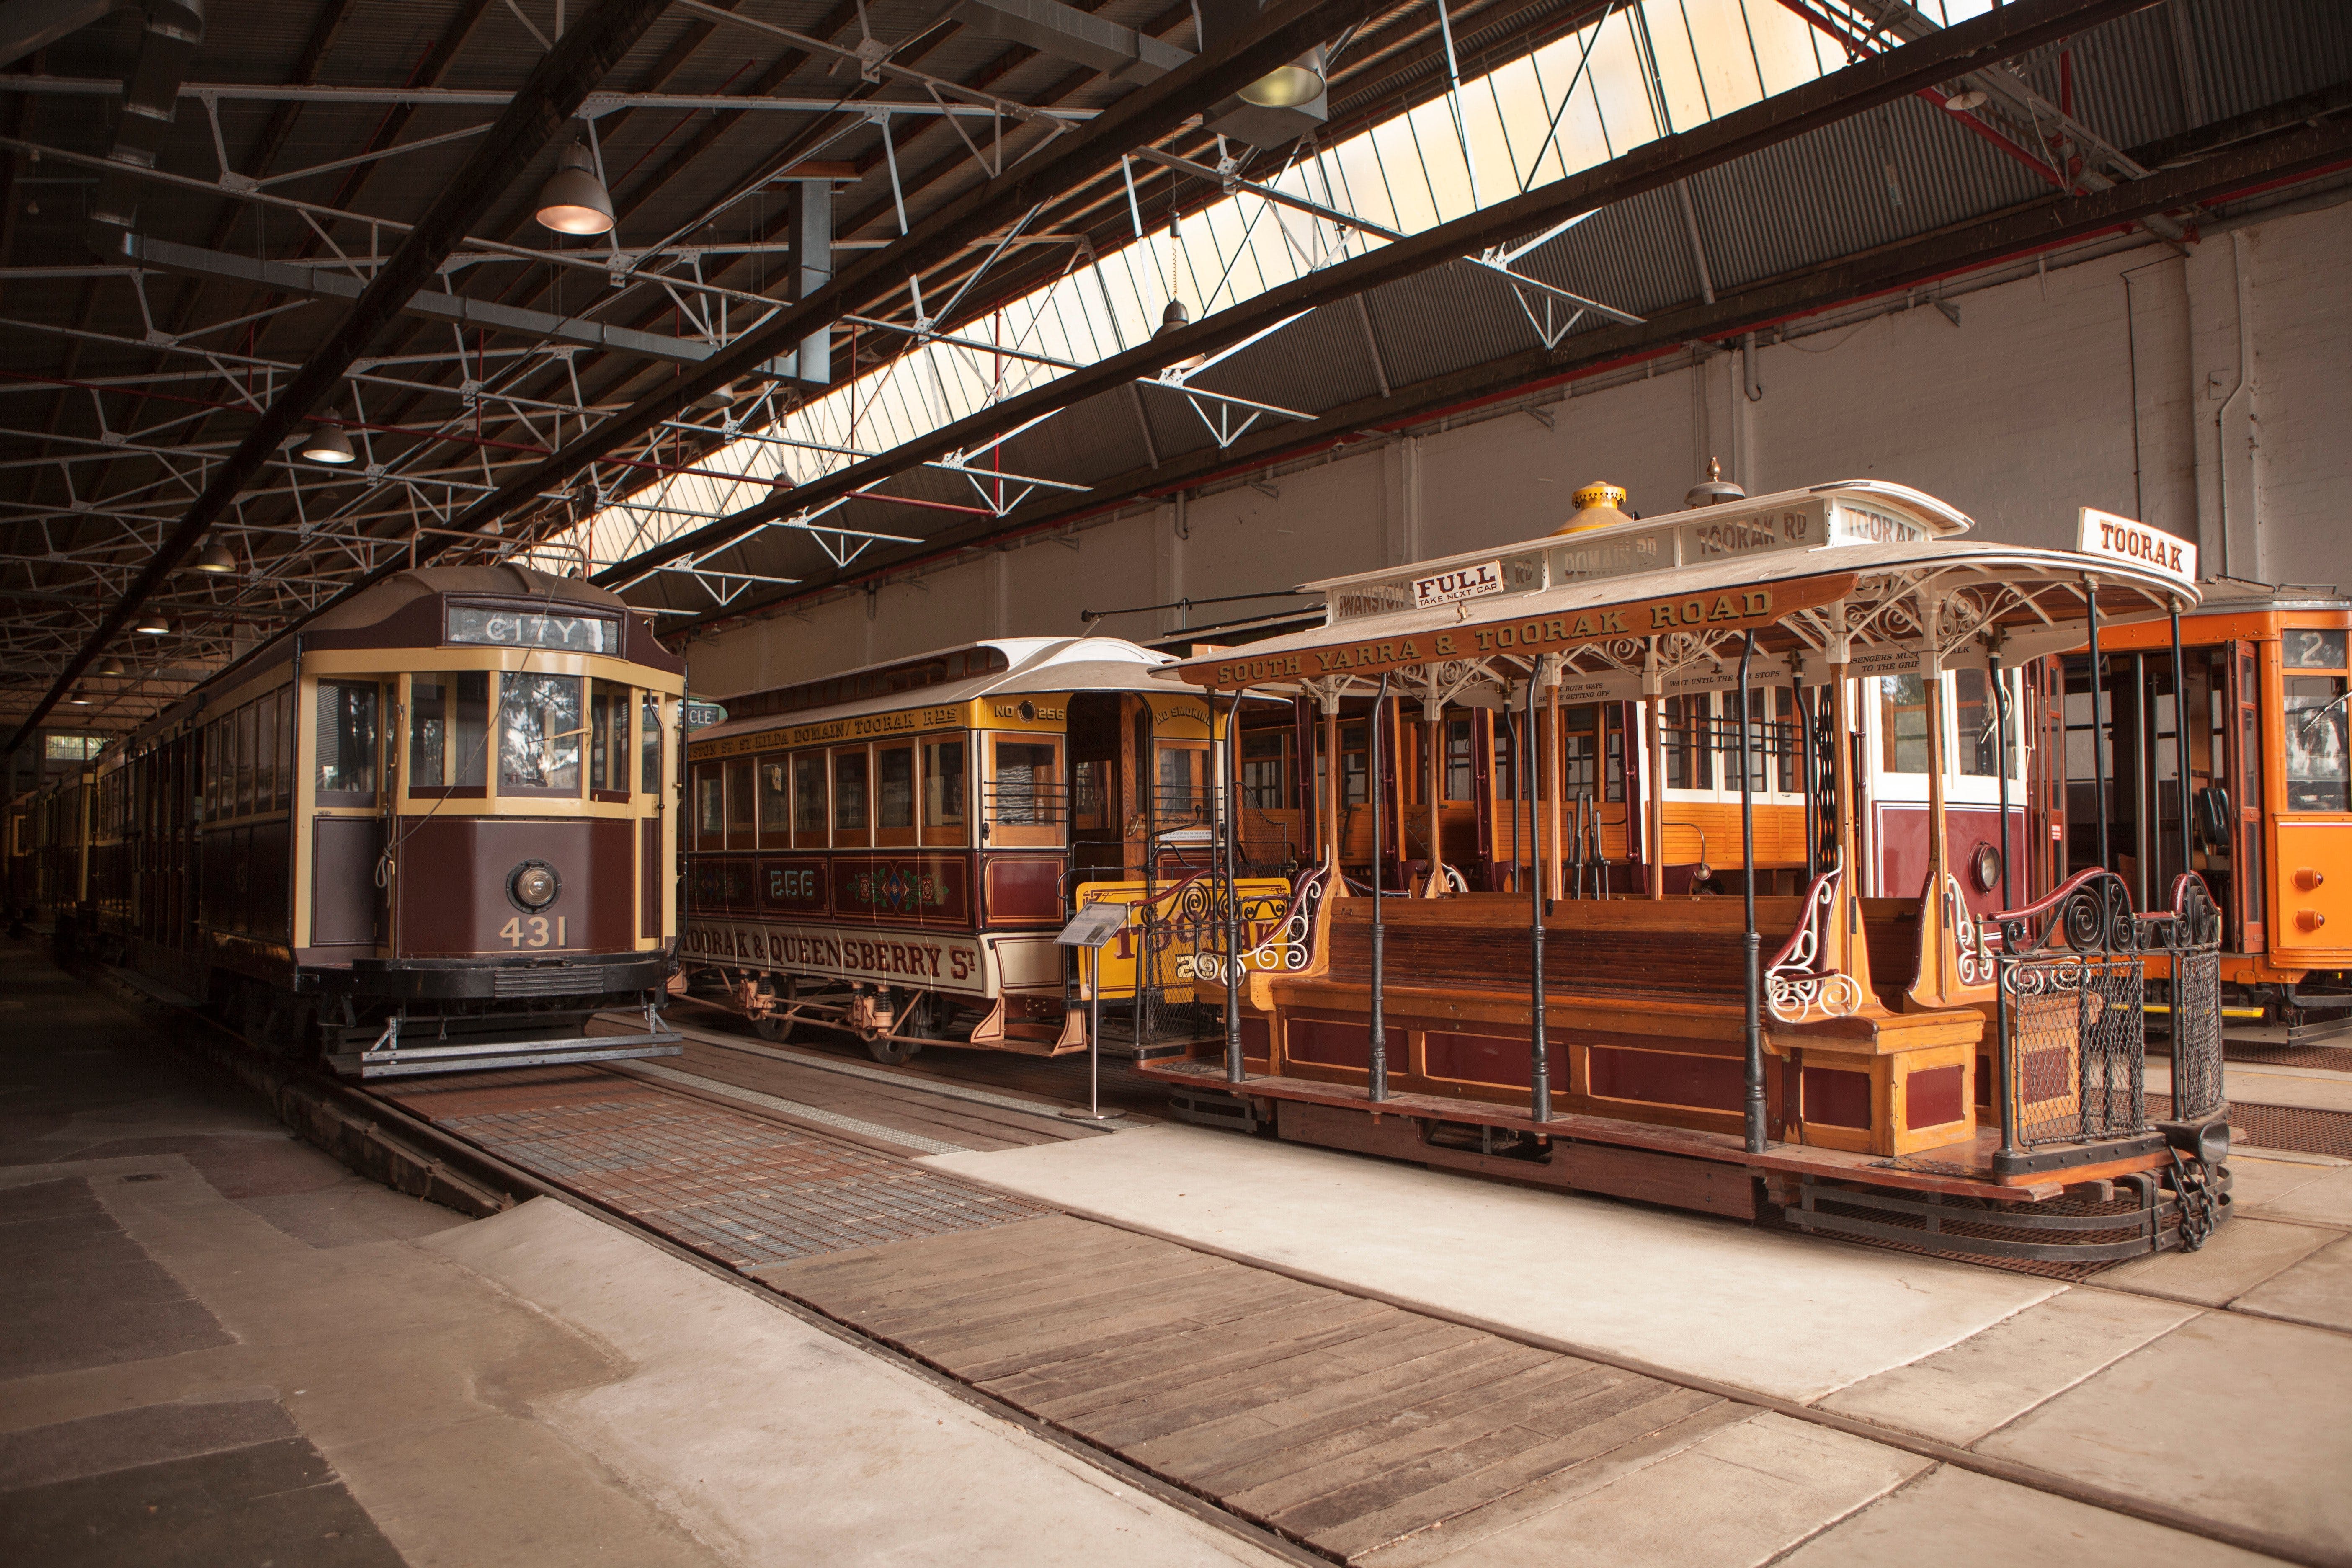 Melbourne Tram Museum - Accommodation Brunswick Heads